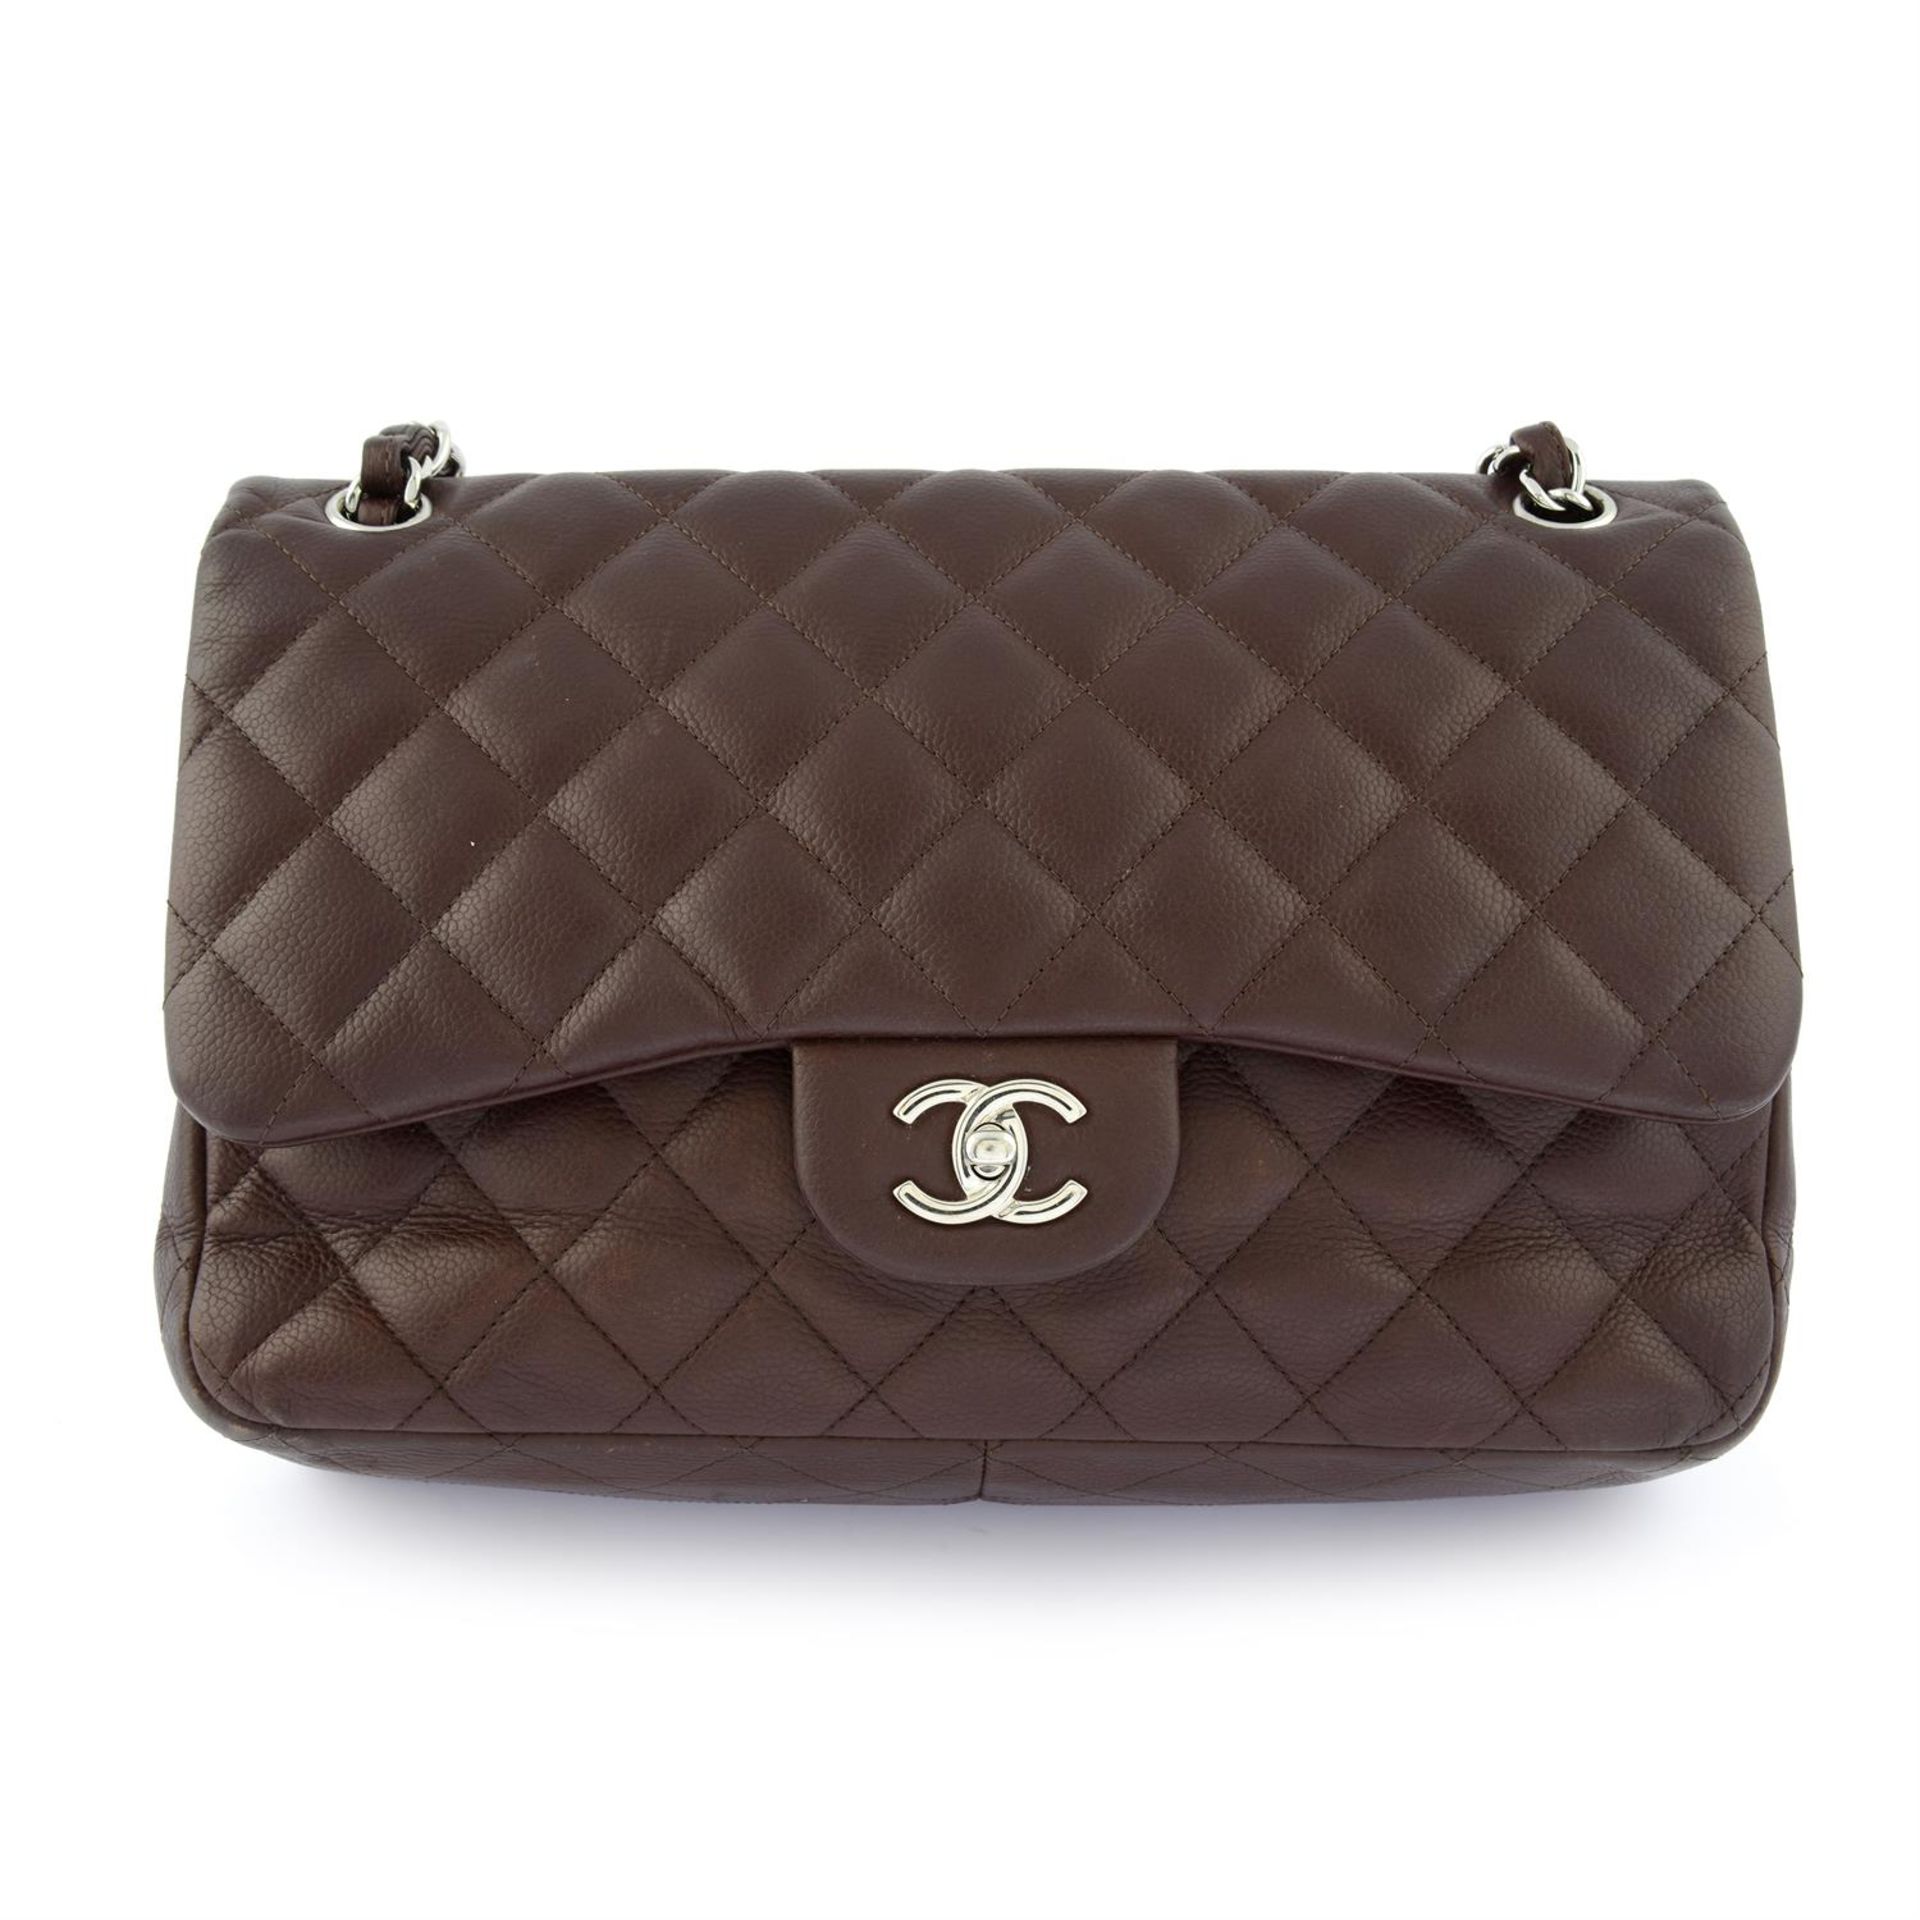 CHANEL - a burgundy lambskin leather double flap classic handbag.